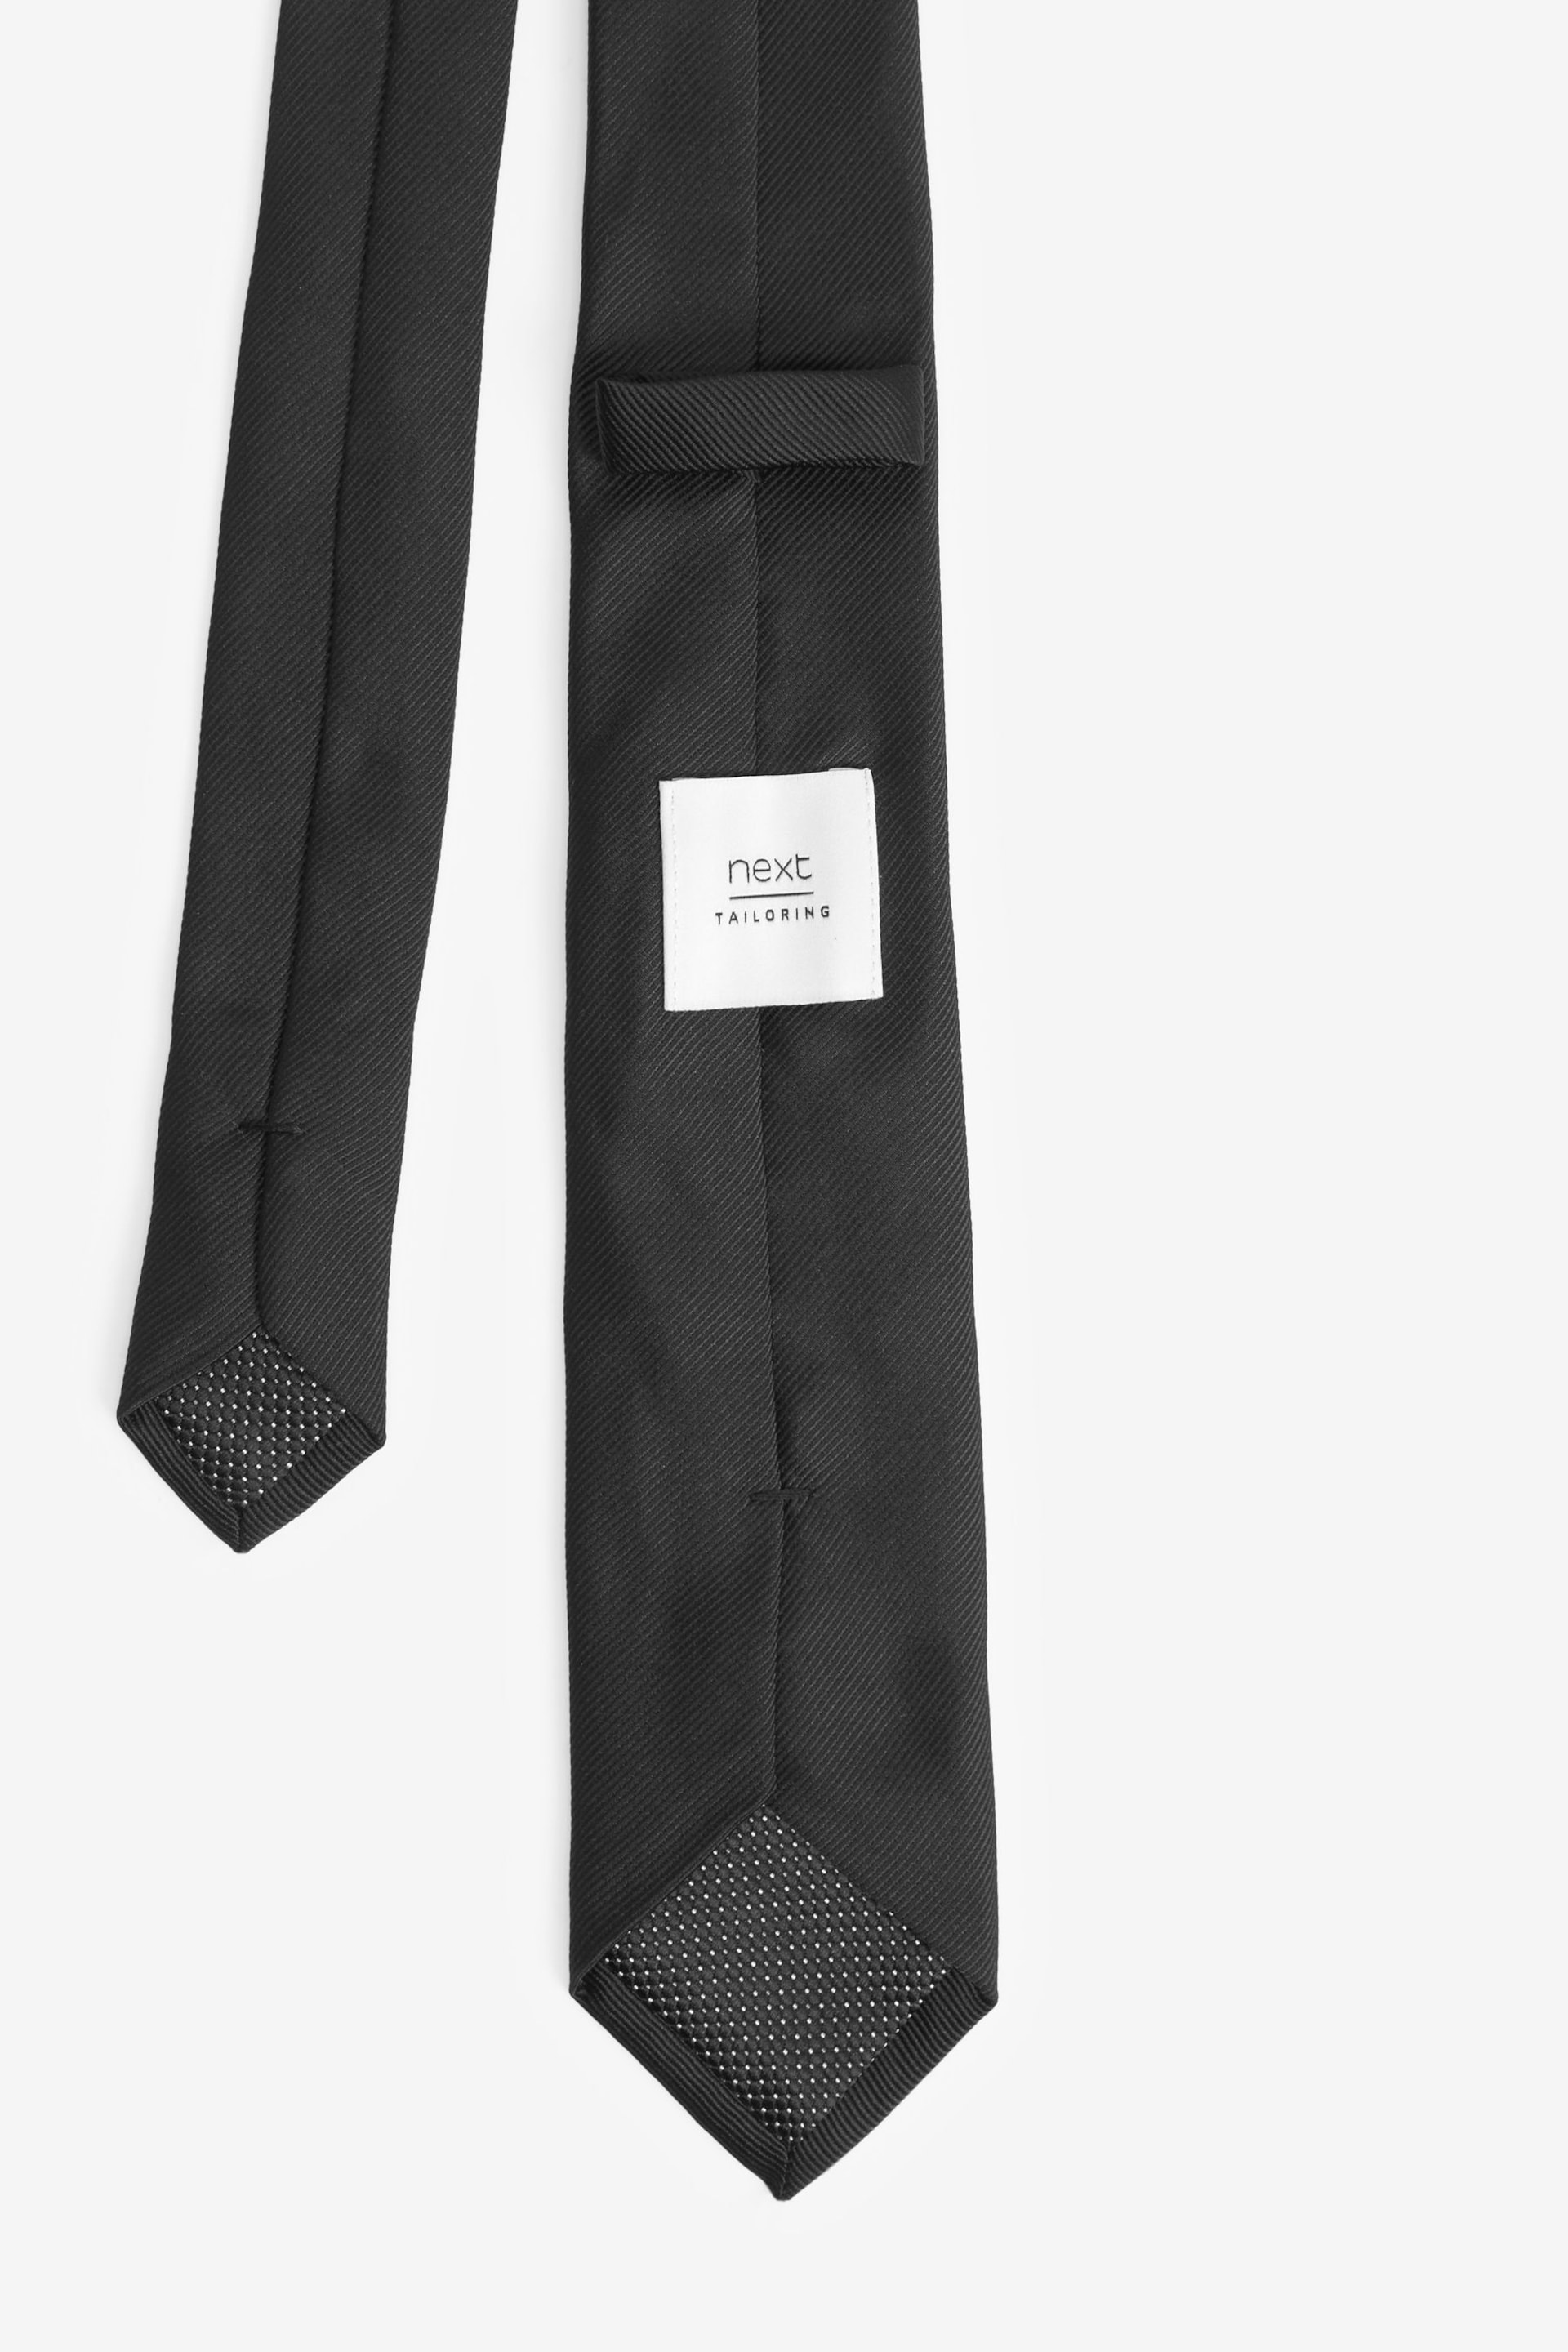 Black Slim Twill Tie - Image 2 of 3